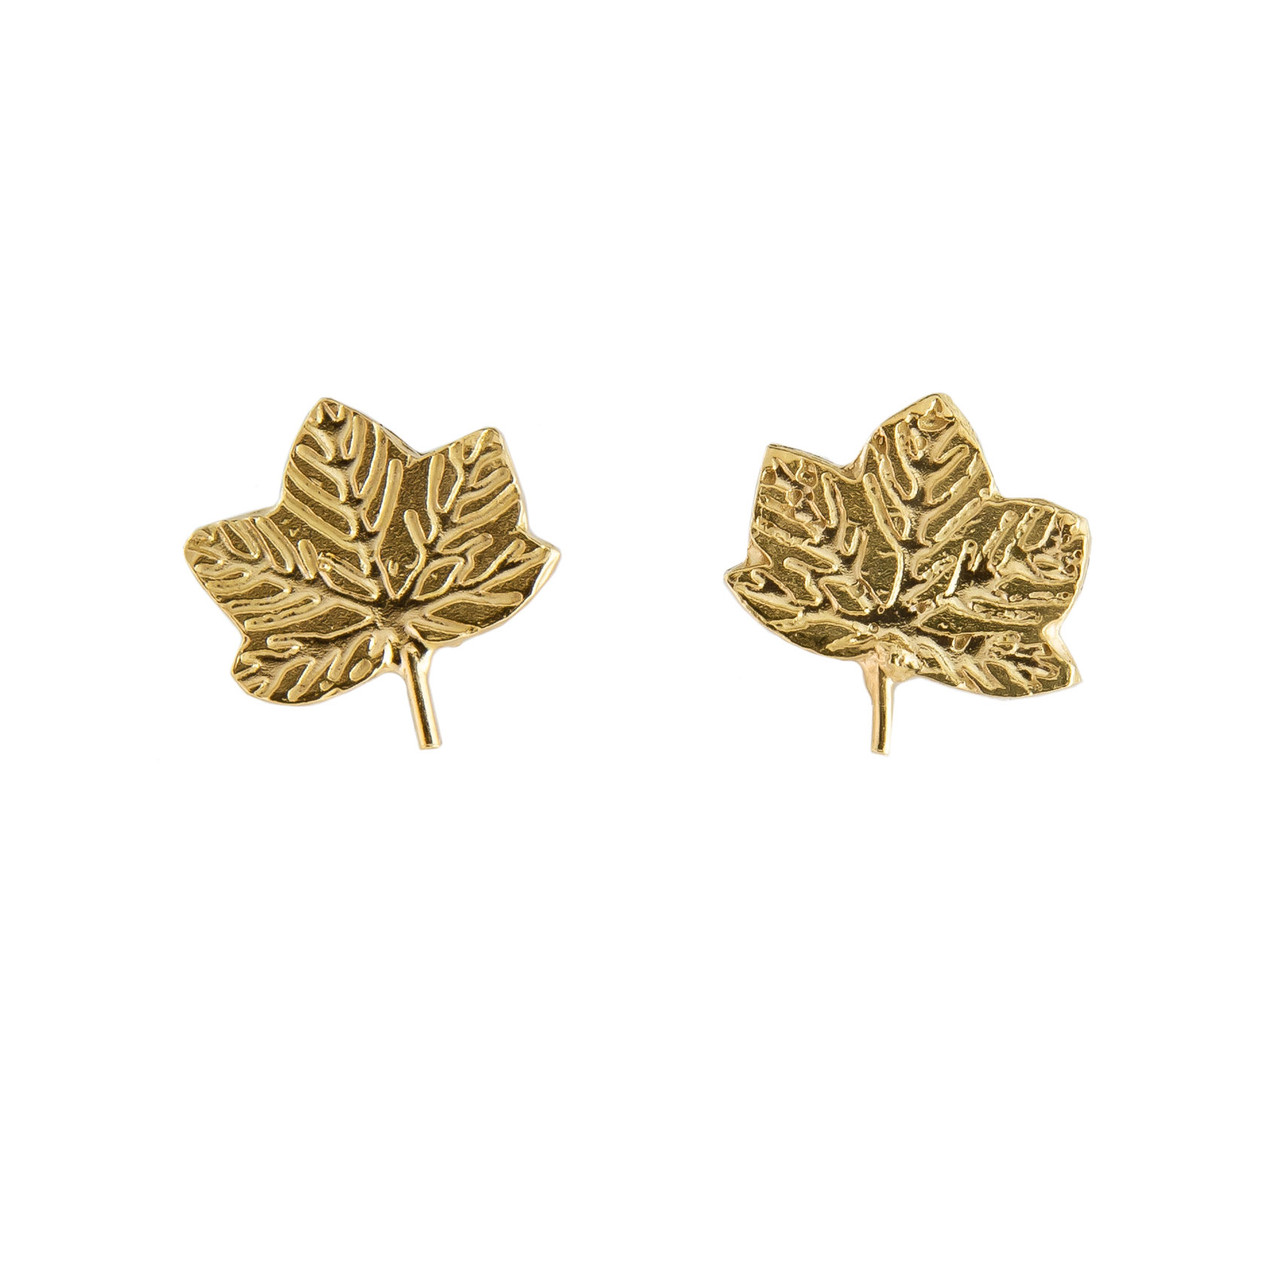 Maple leaf stud by UK jewellery designer Amanda Coleman. Available to shop online at tomfoolerylondon.co.uk